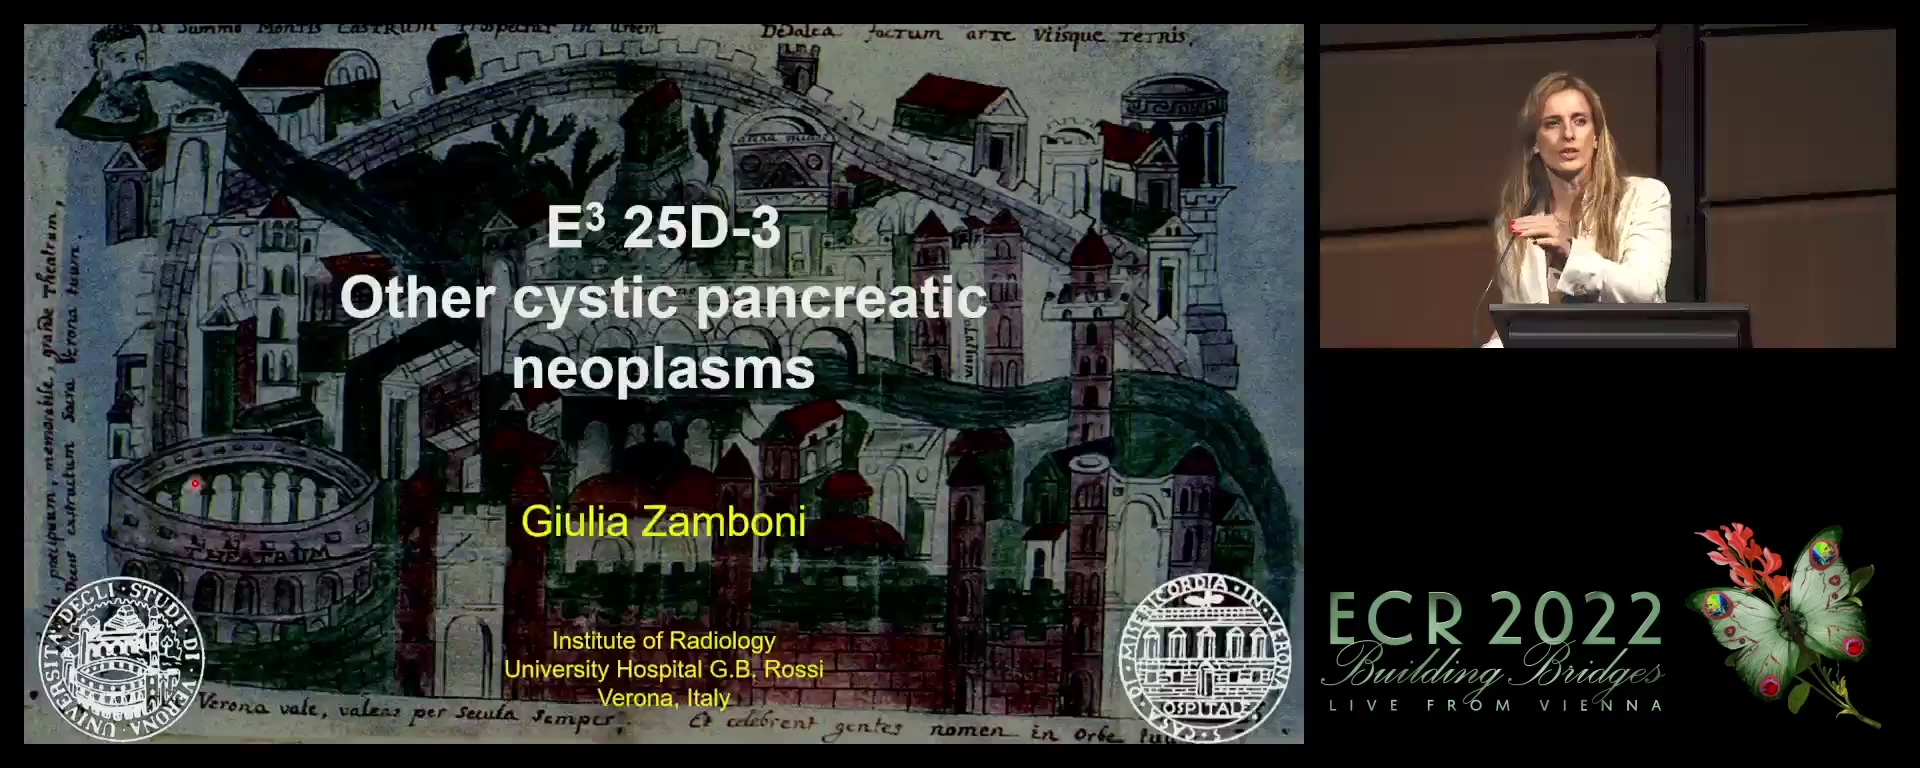 Other cystic pancreatic neoplasms - Giulia Zamboni, Verona / IT